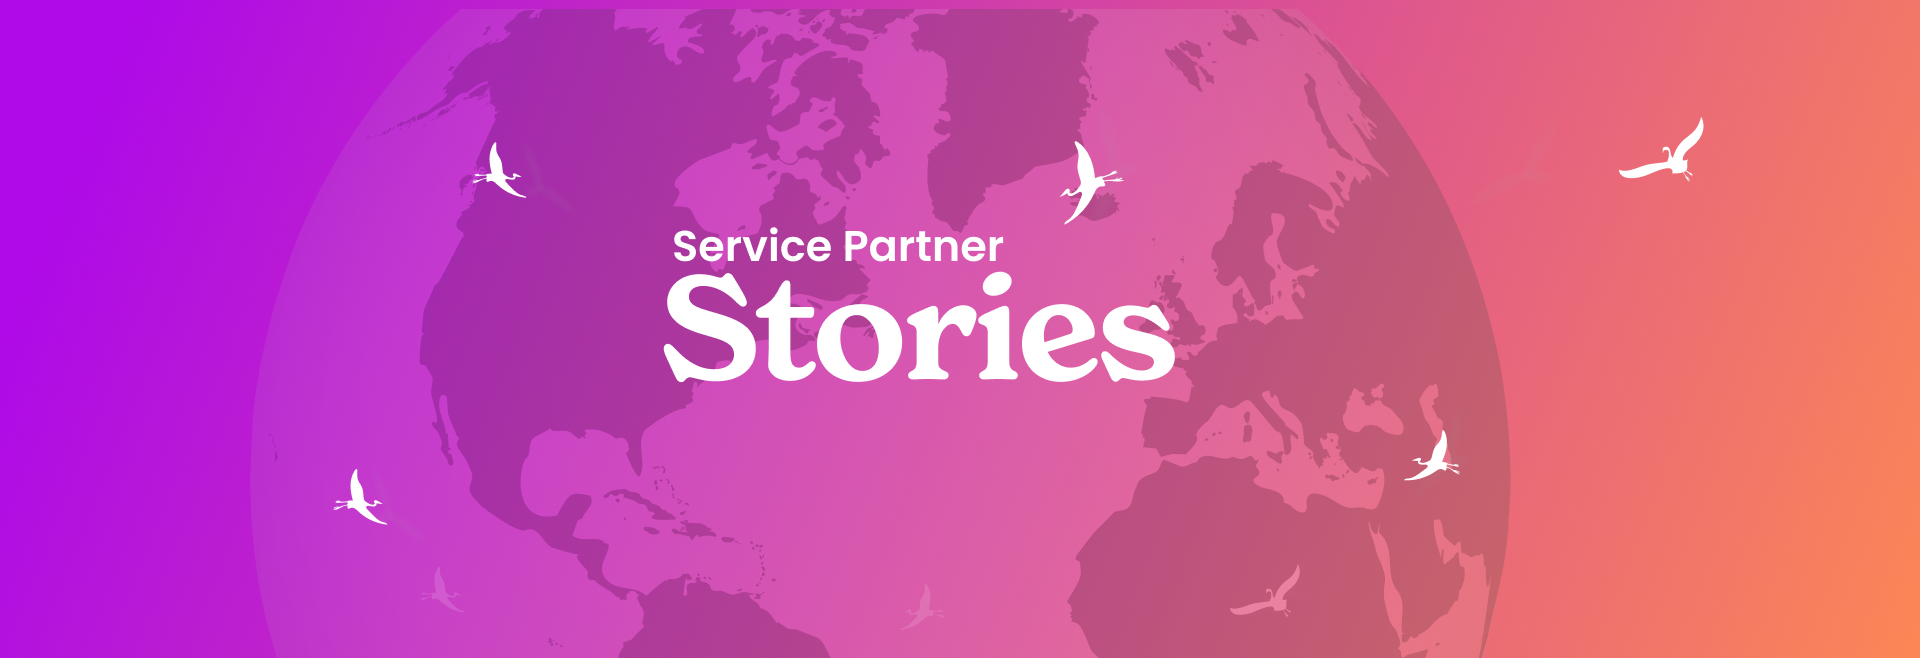 Service Partner Stories